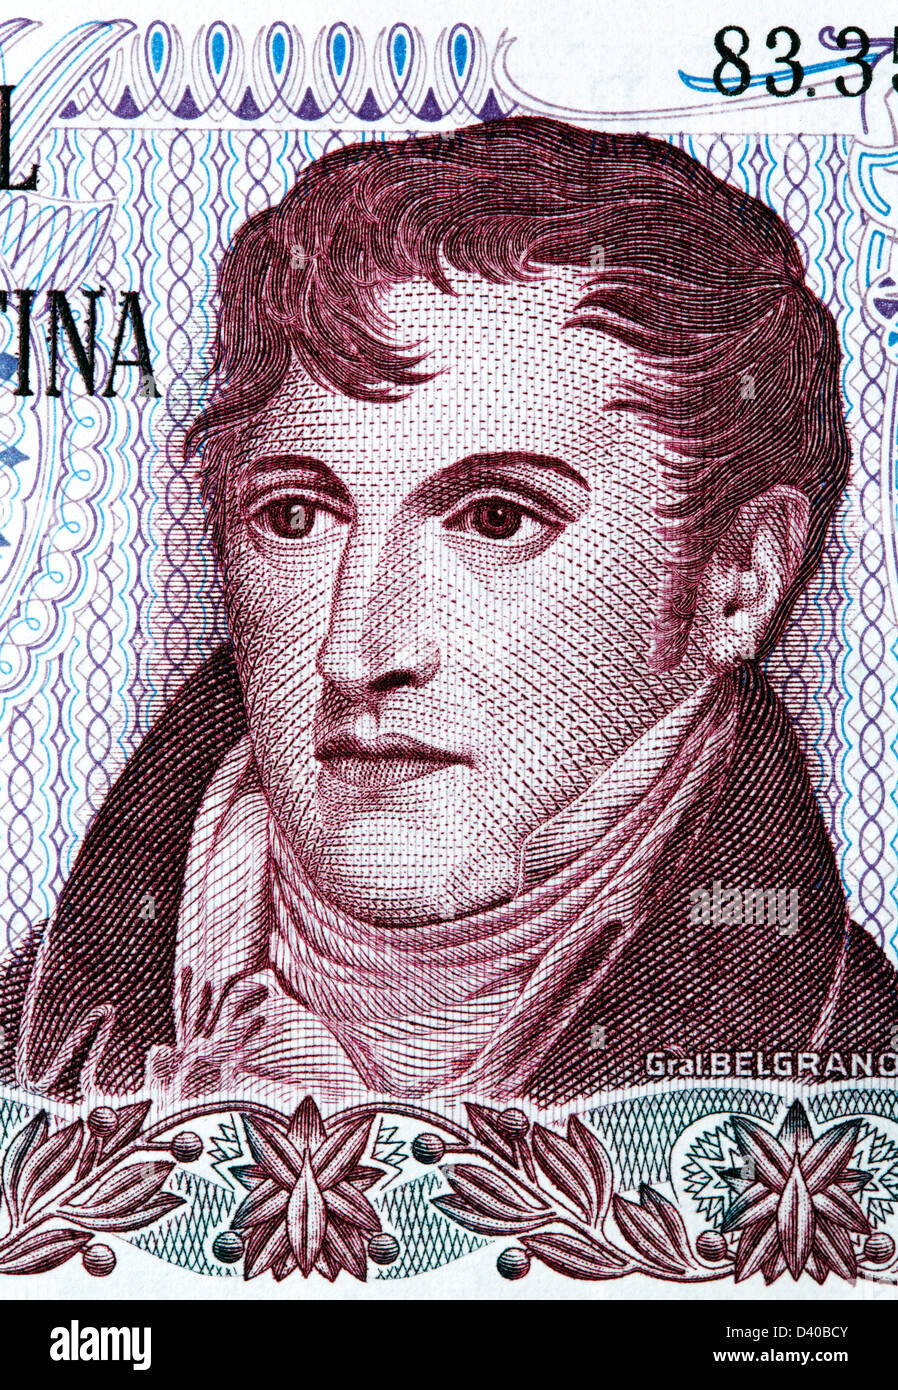 Portrait of General Manuel Belgrano from 10 pesos banknote, Argentina, 1973 Stock Photo